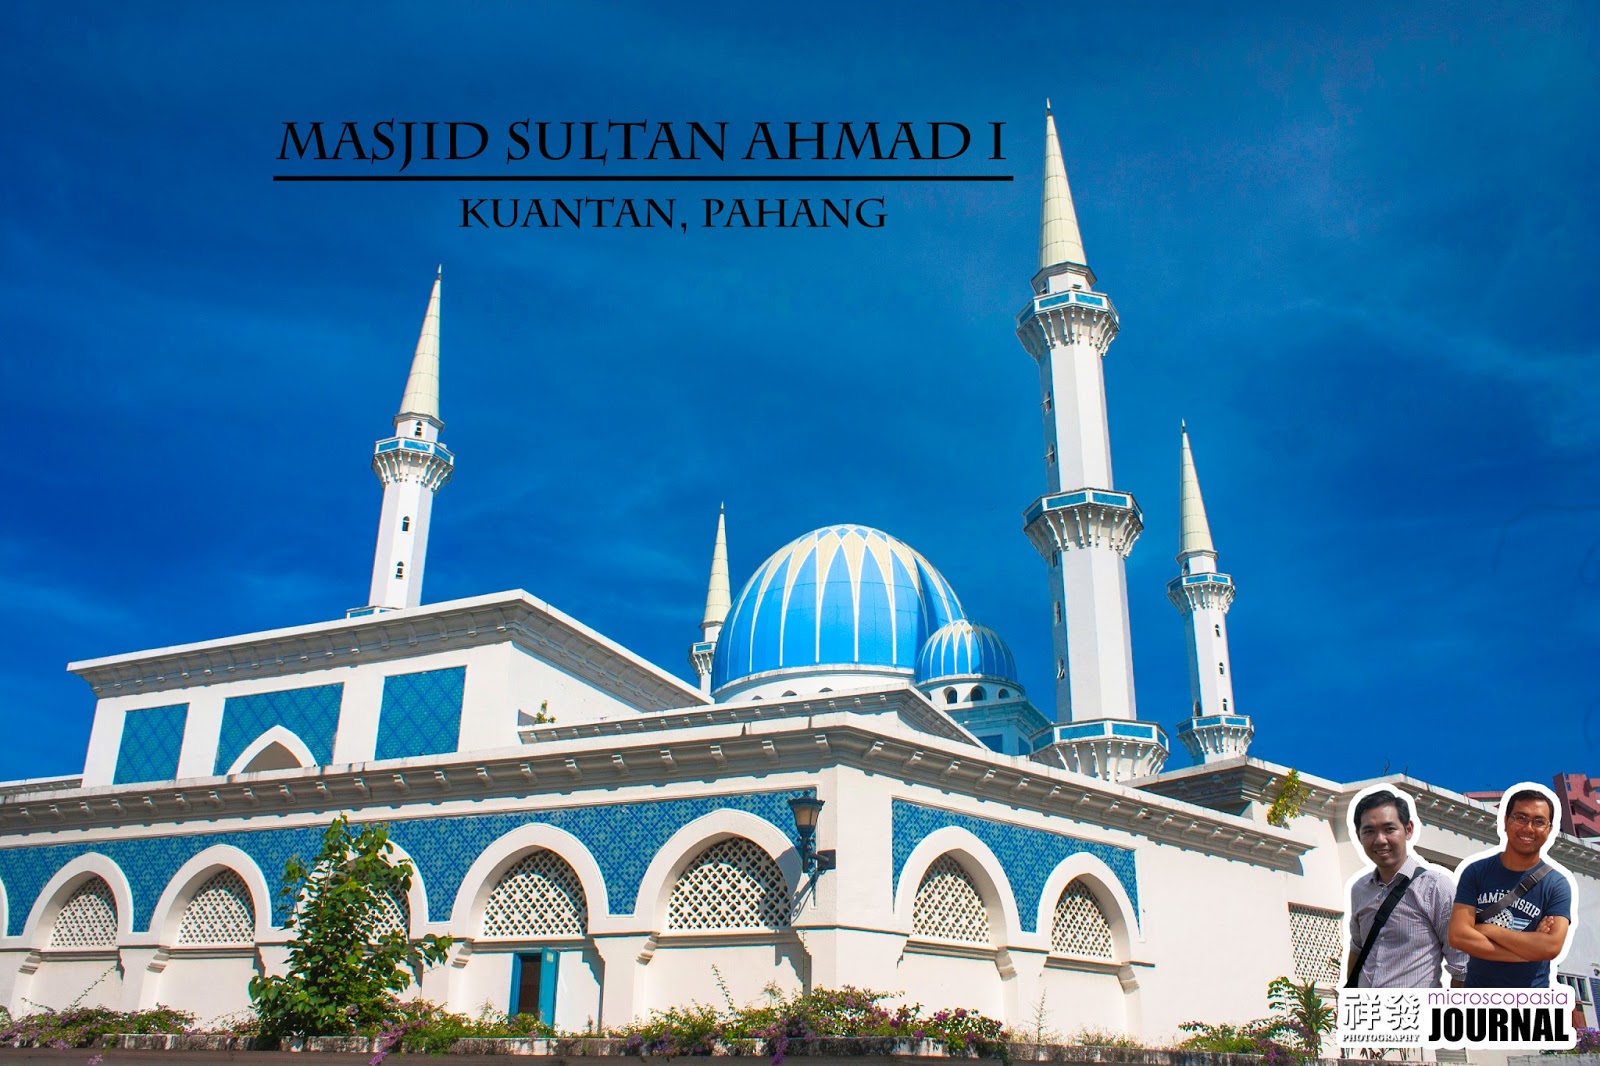  Kuantan  Places Masjid Sultan Ahmad I the Biggest in Pahang 